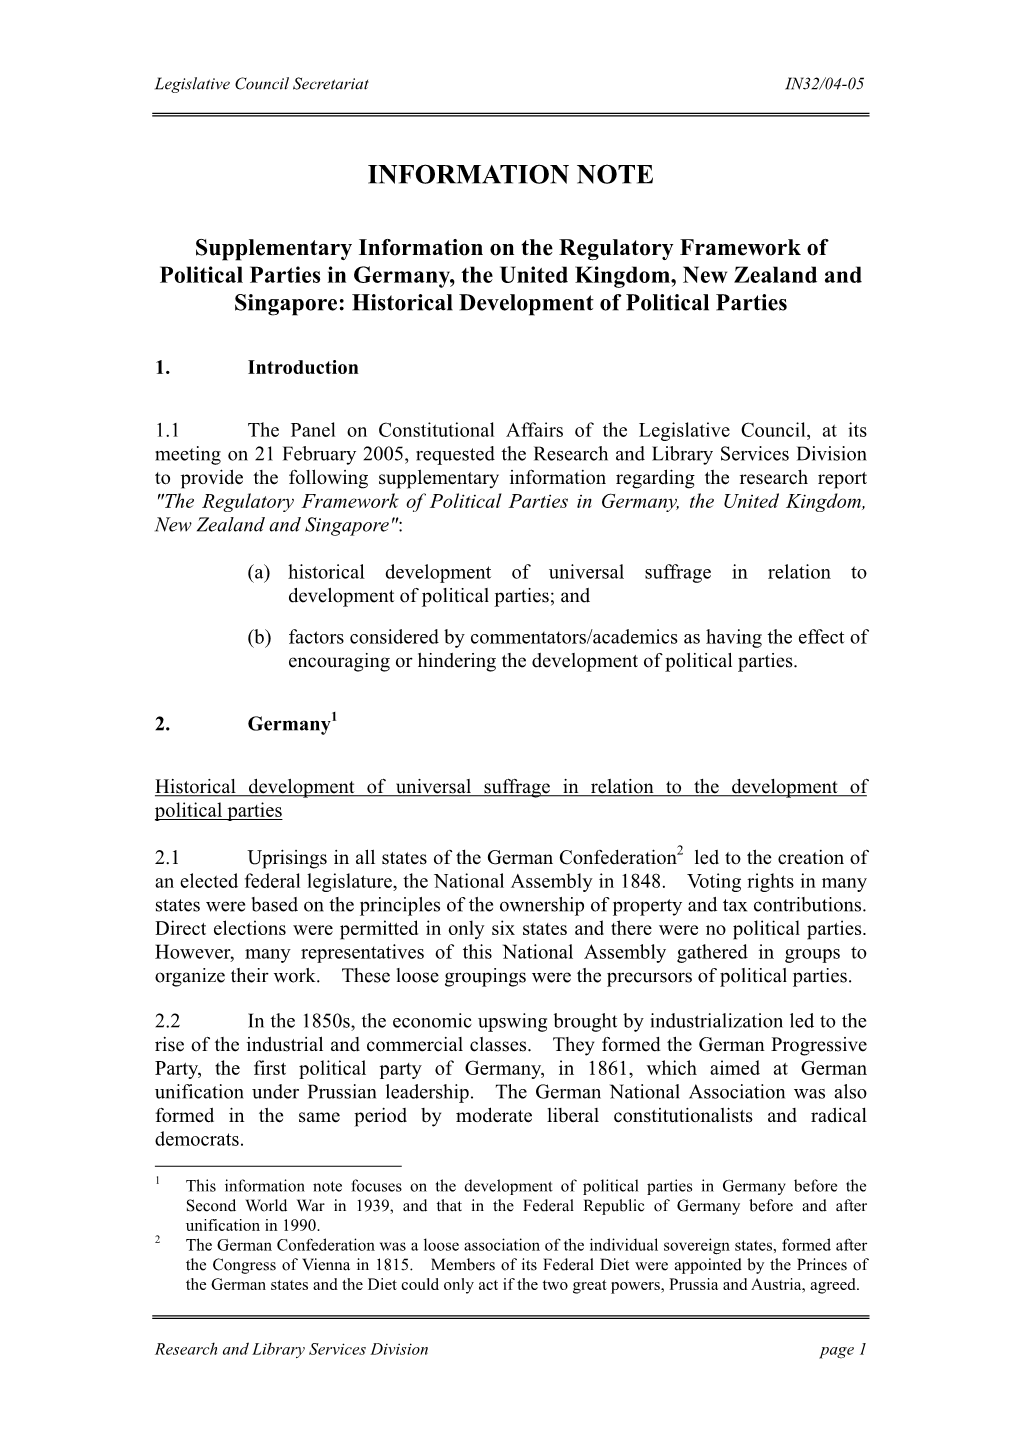 Supplementary Information on the Regulatory